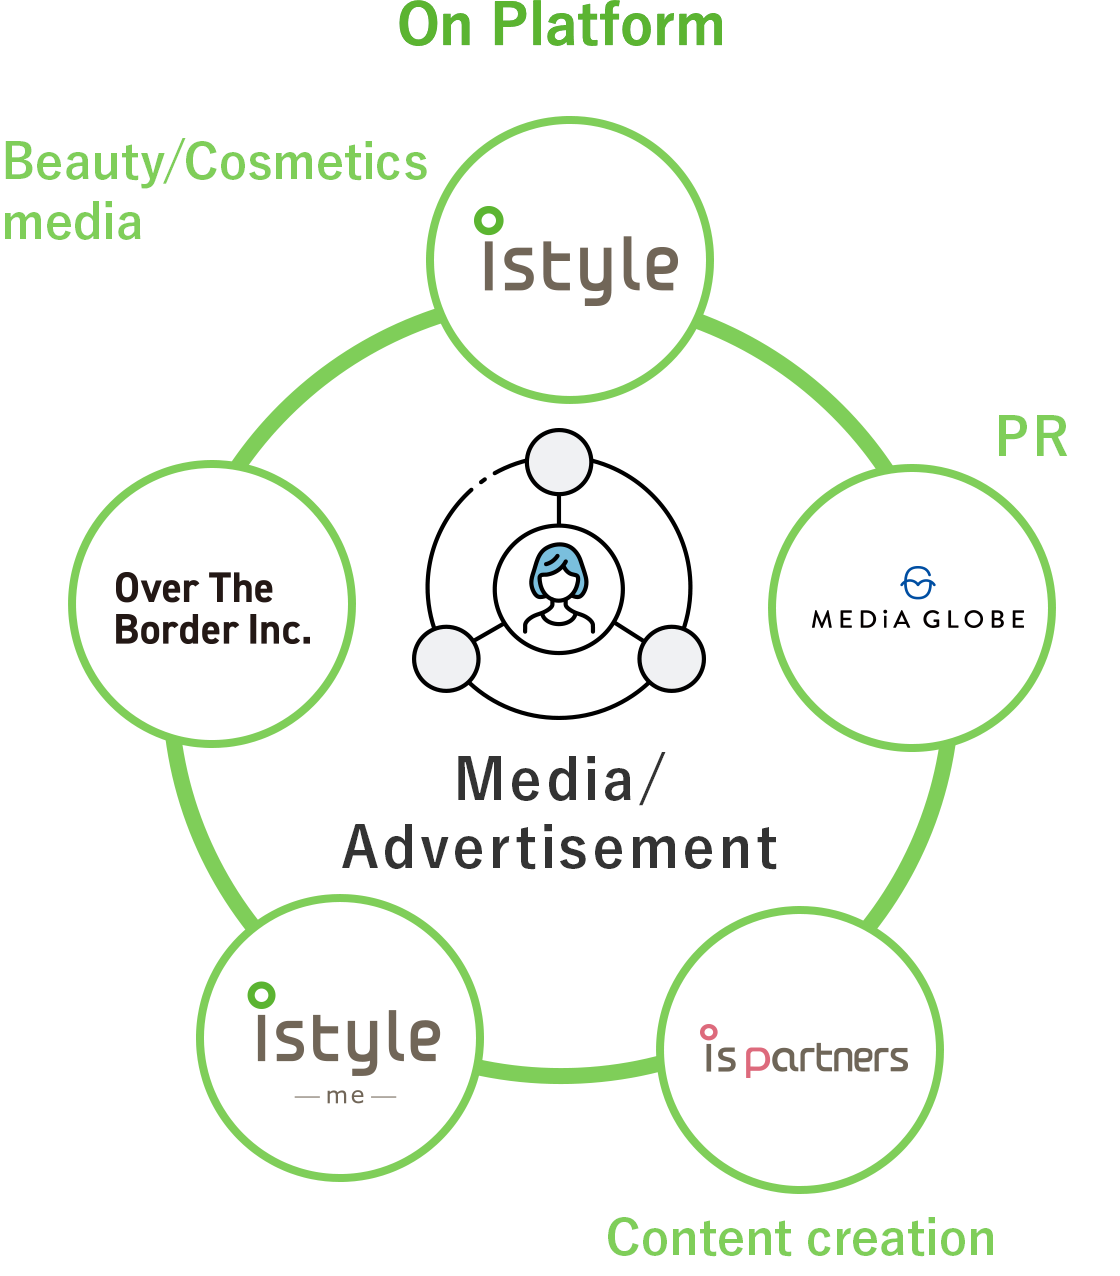 On Platform Media · Advertisement (beauty / cosmetics, PR, content production, food media)